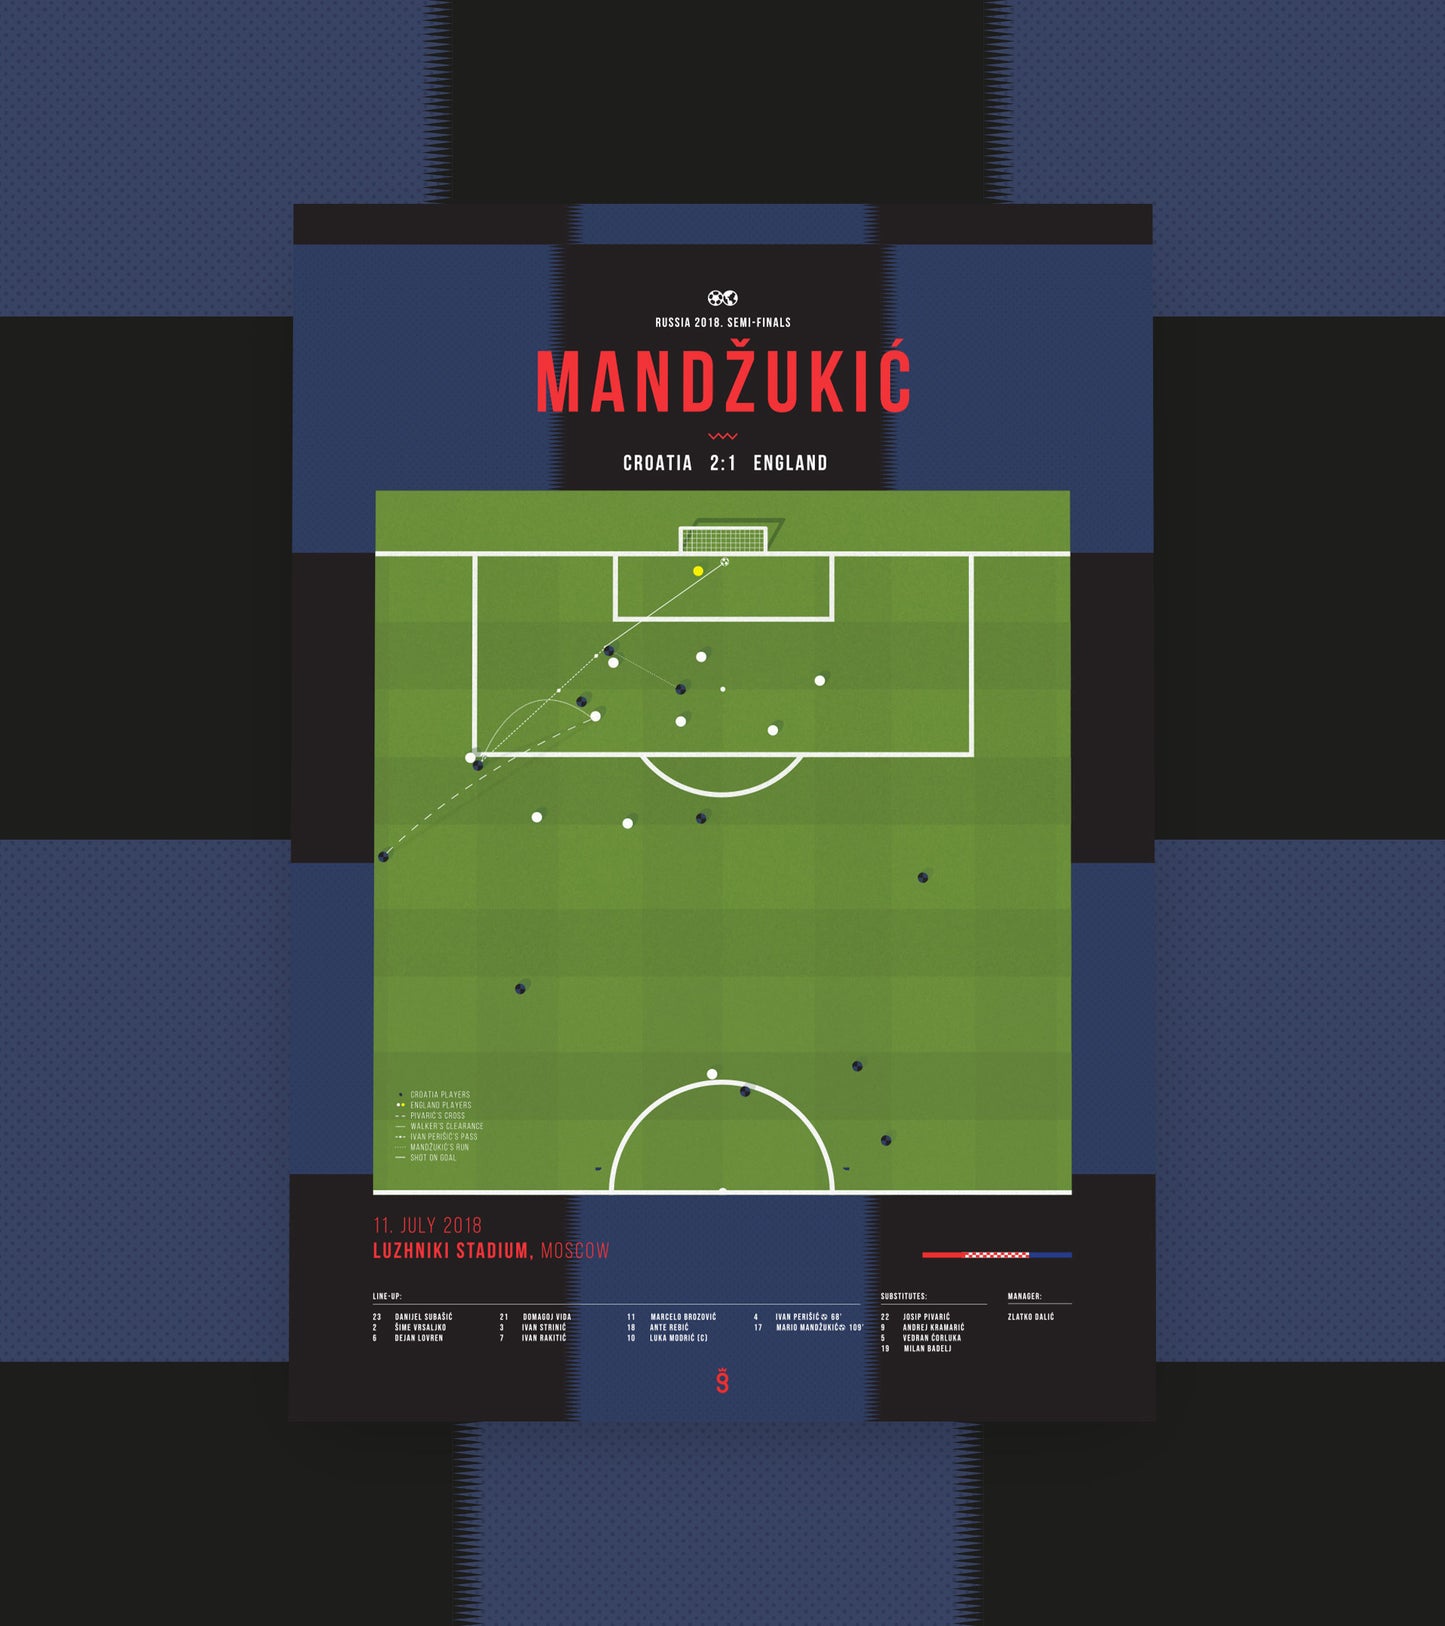 Mario Mandžukić shot Croatia into the first World Cup final ever